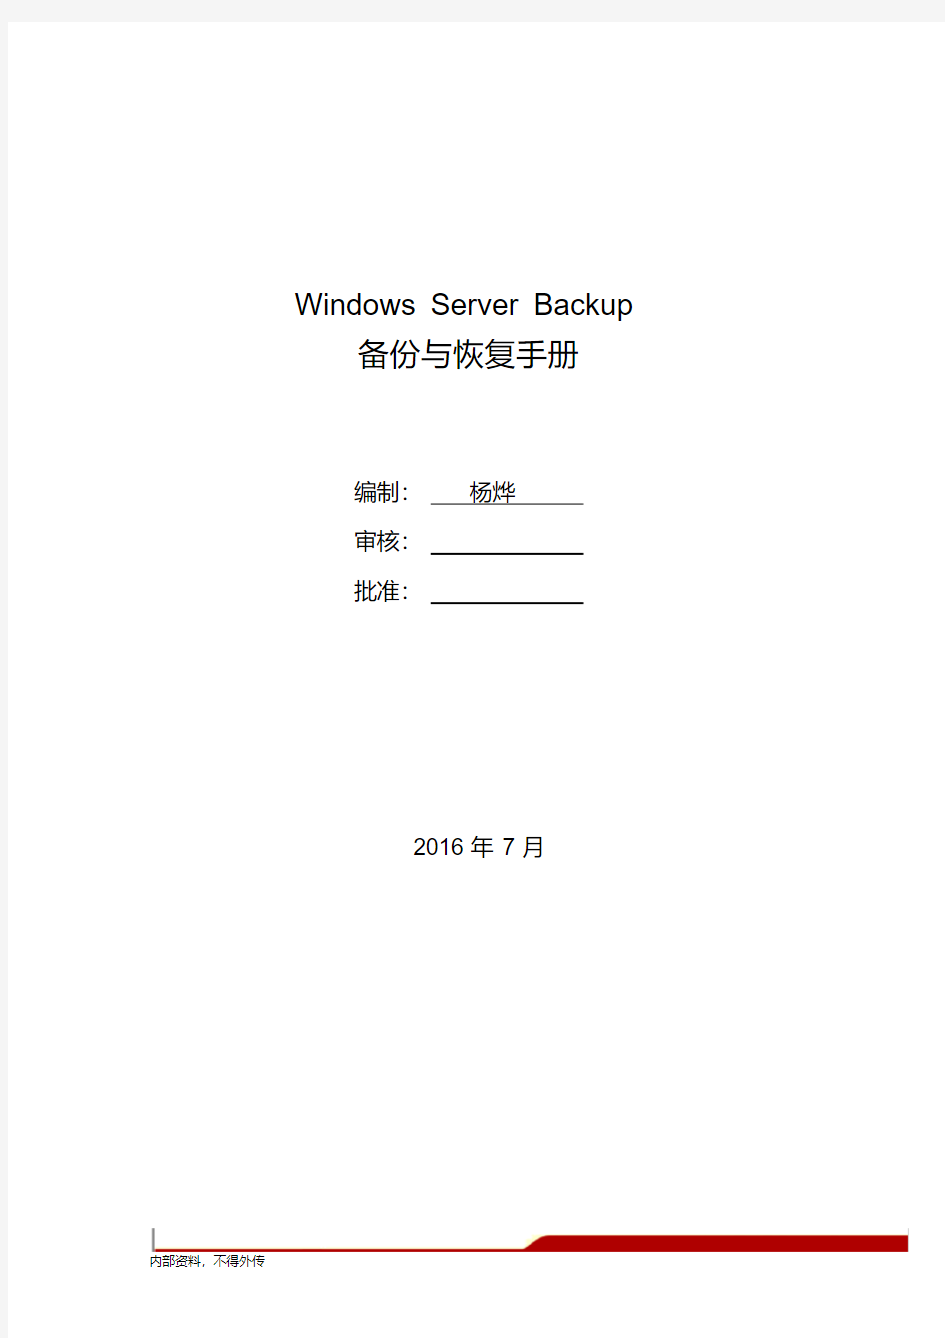 WindowsServerBackup备份与恢复手册